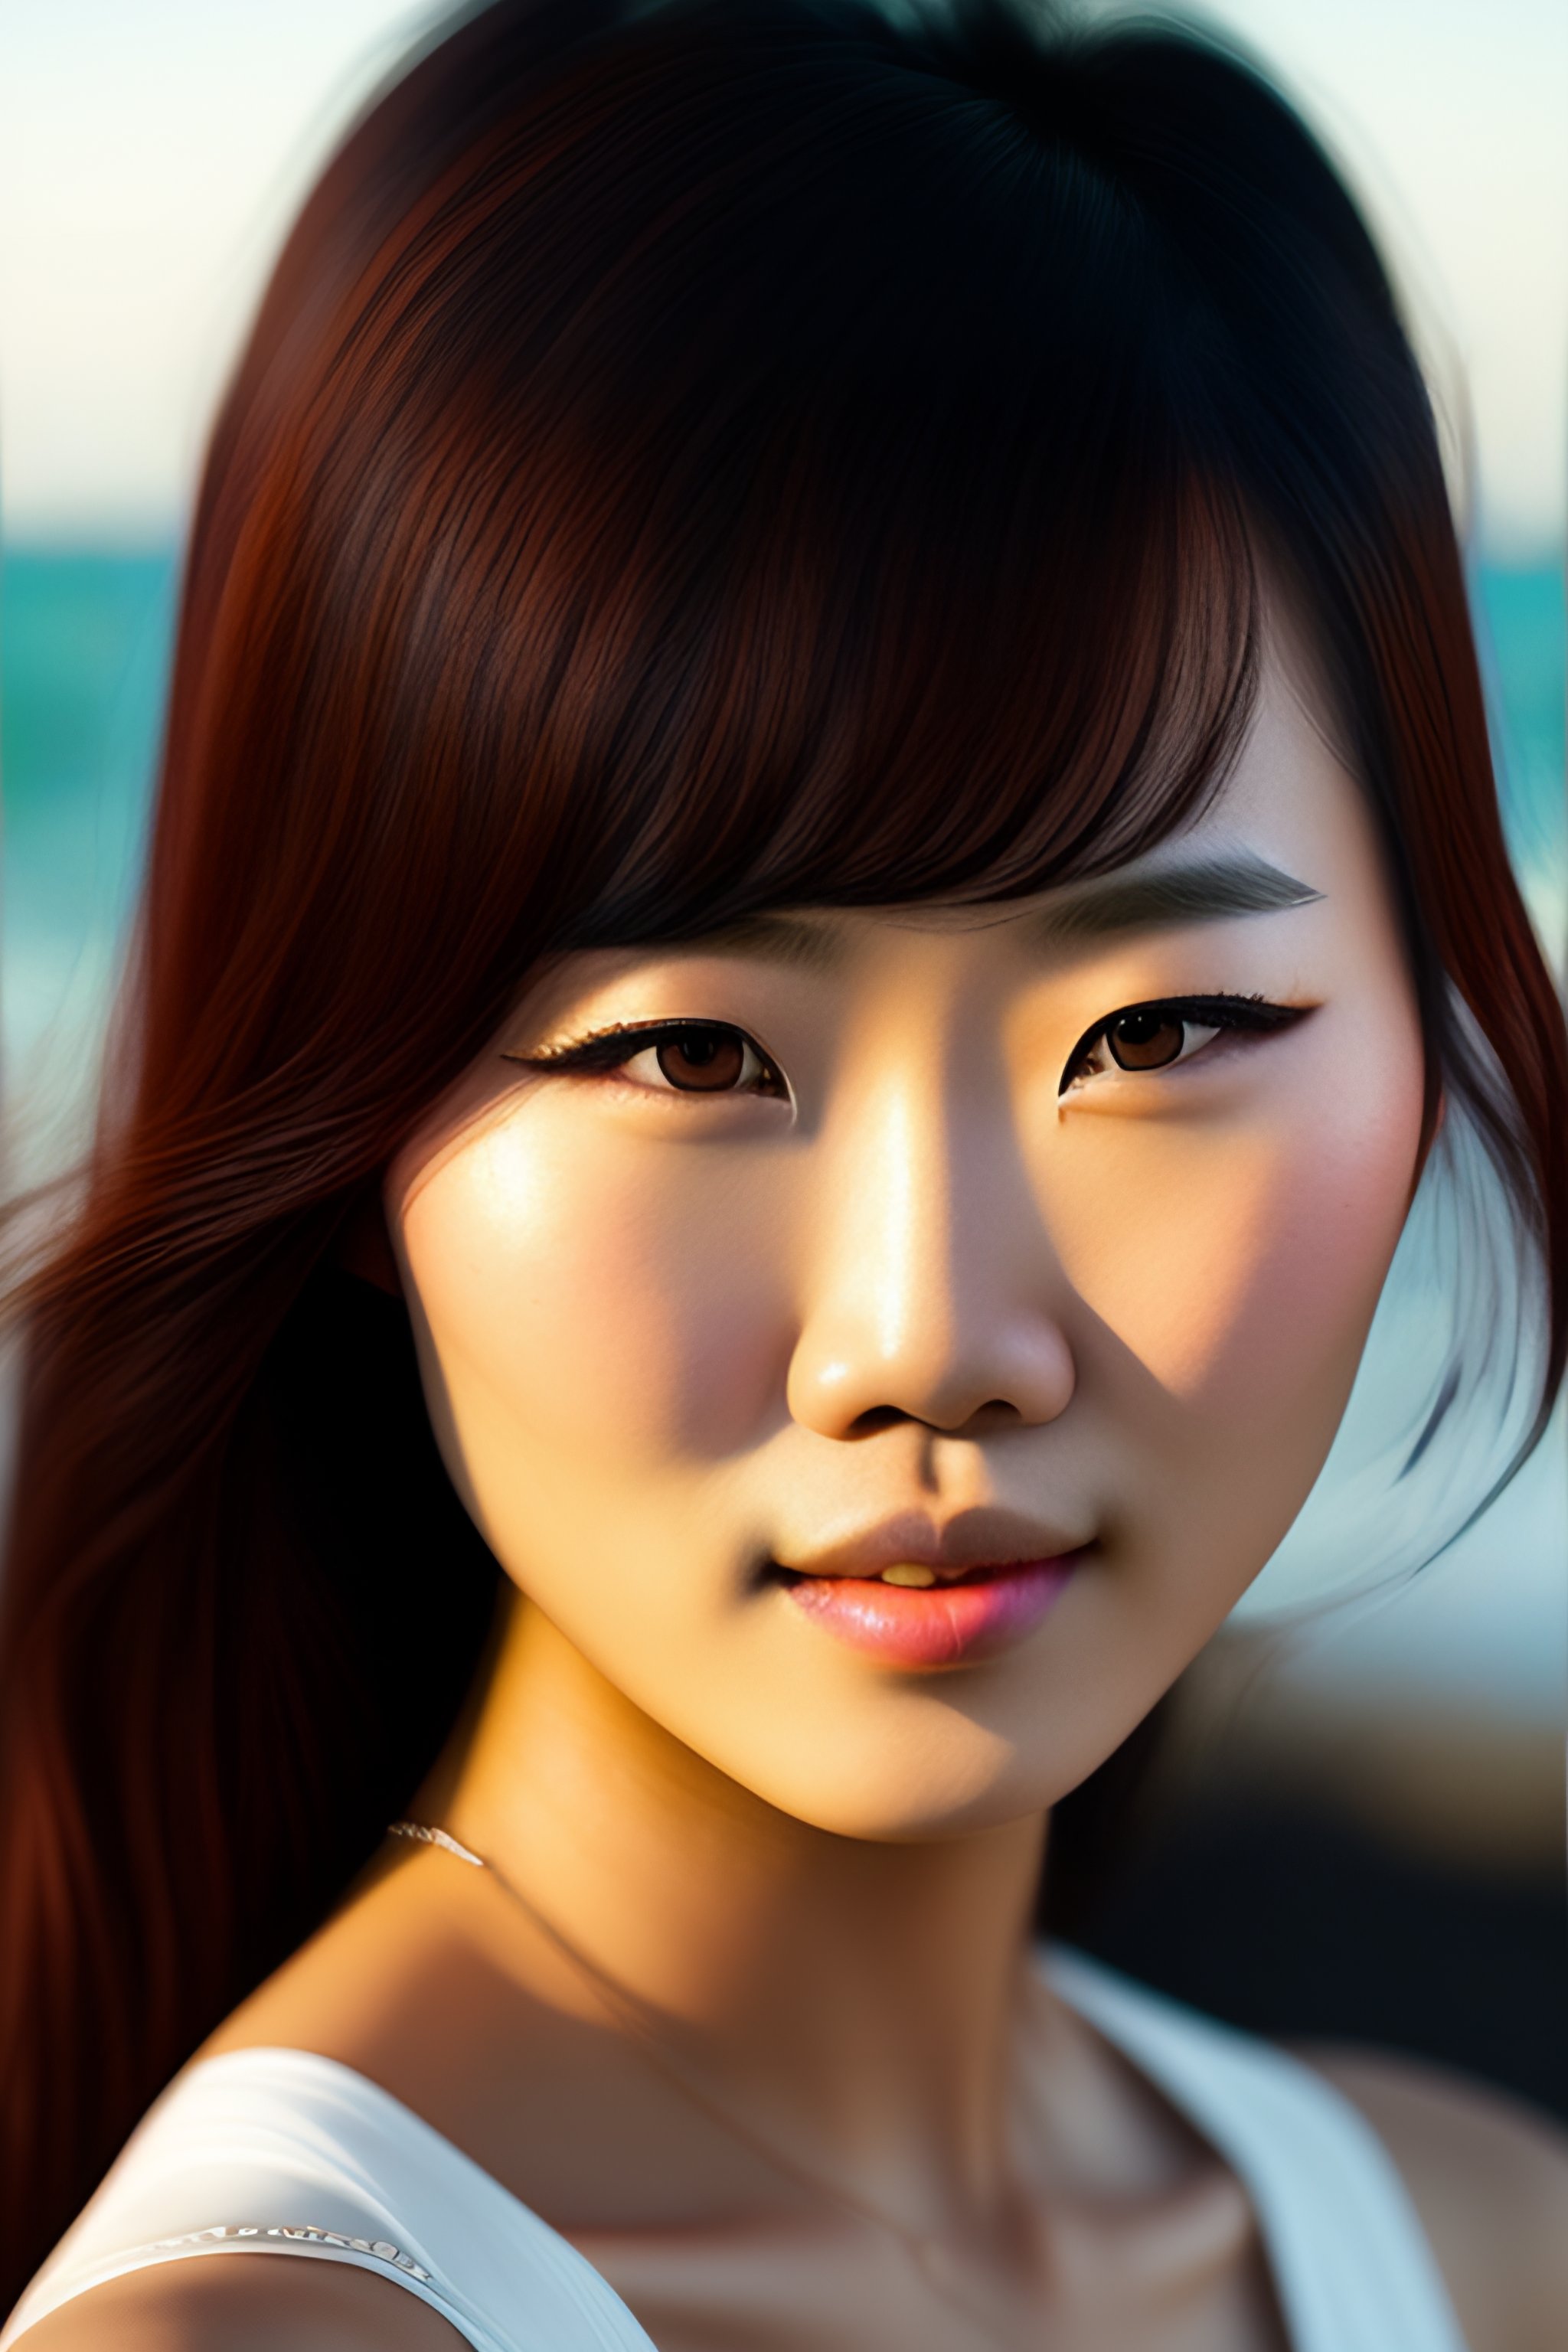 Lexica - A beautiful cute asian girl,at the seaside, fine-face, pretty ...